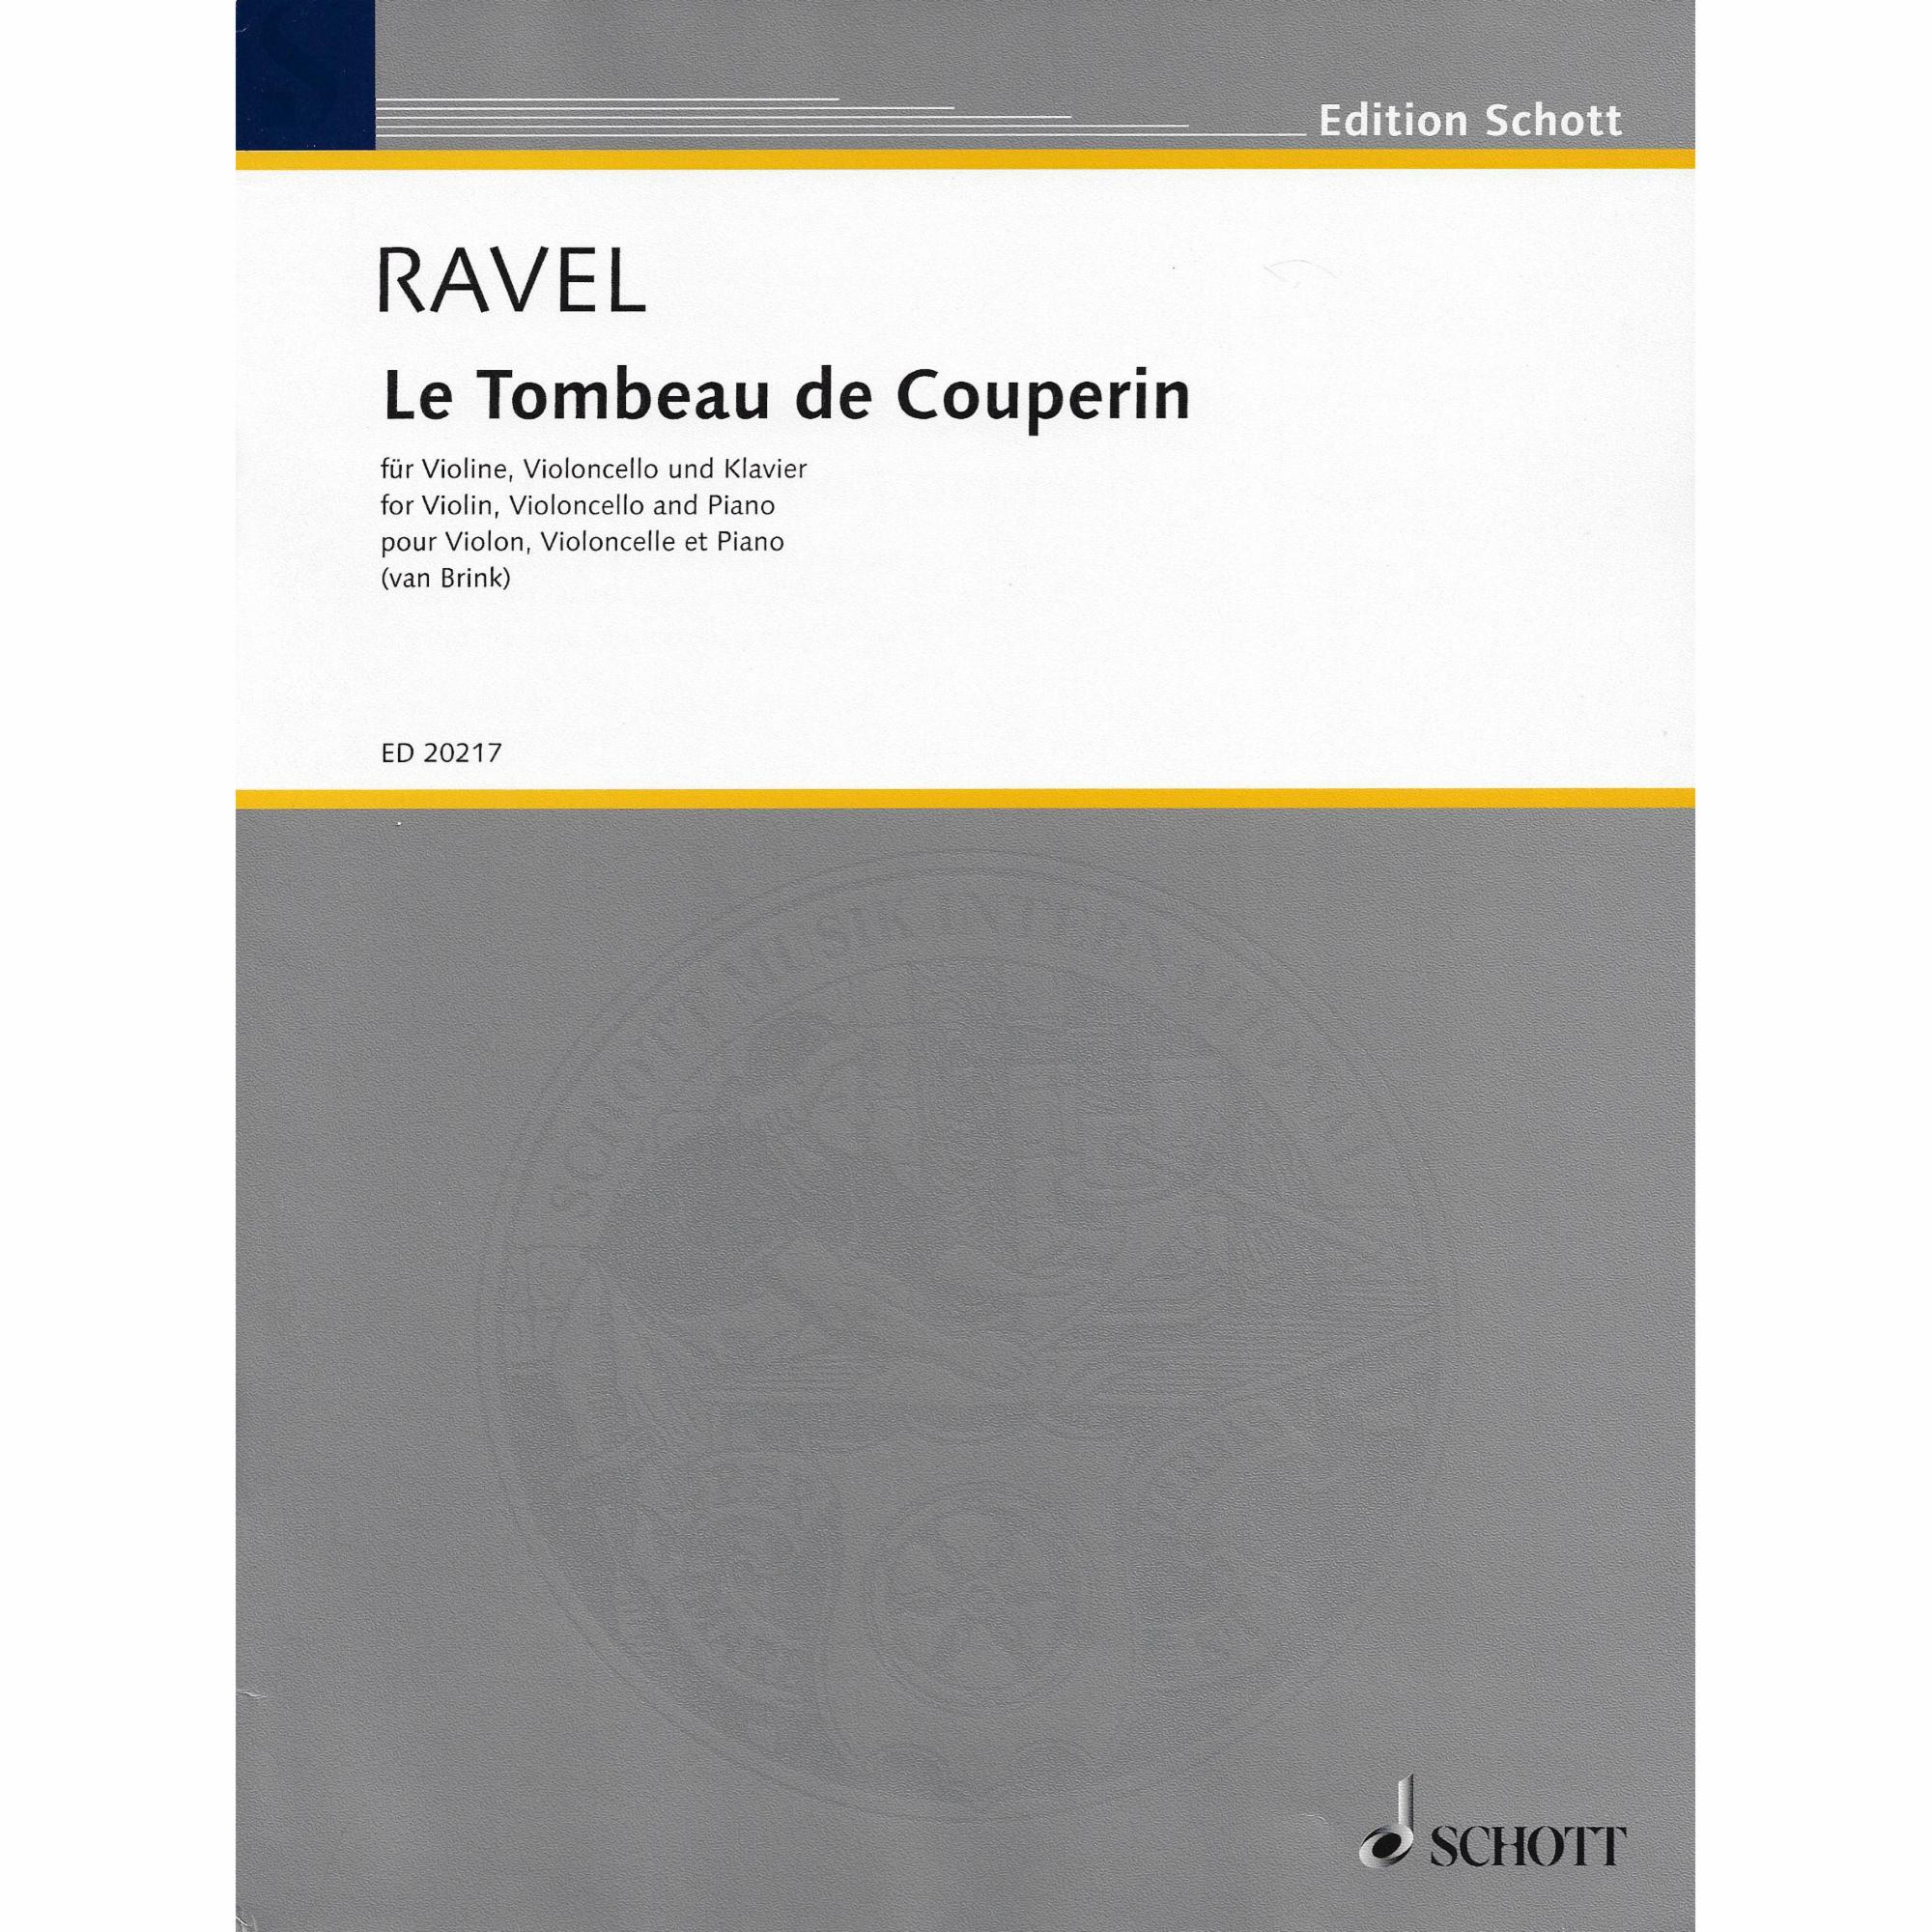 Ravel -- Le Tombeau de Couperin for Piano Trio